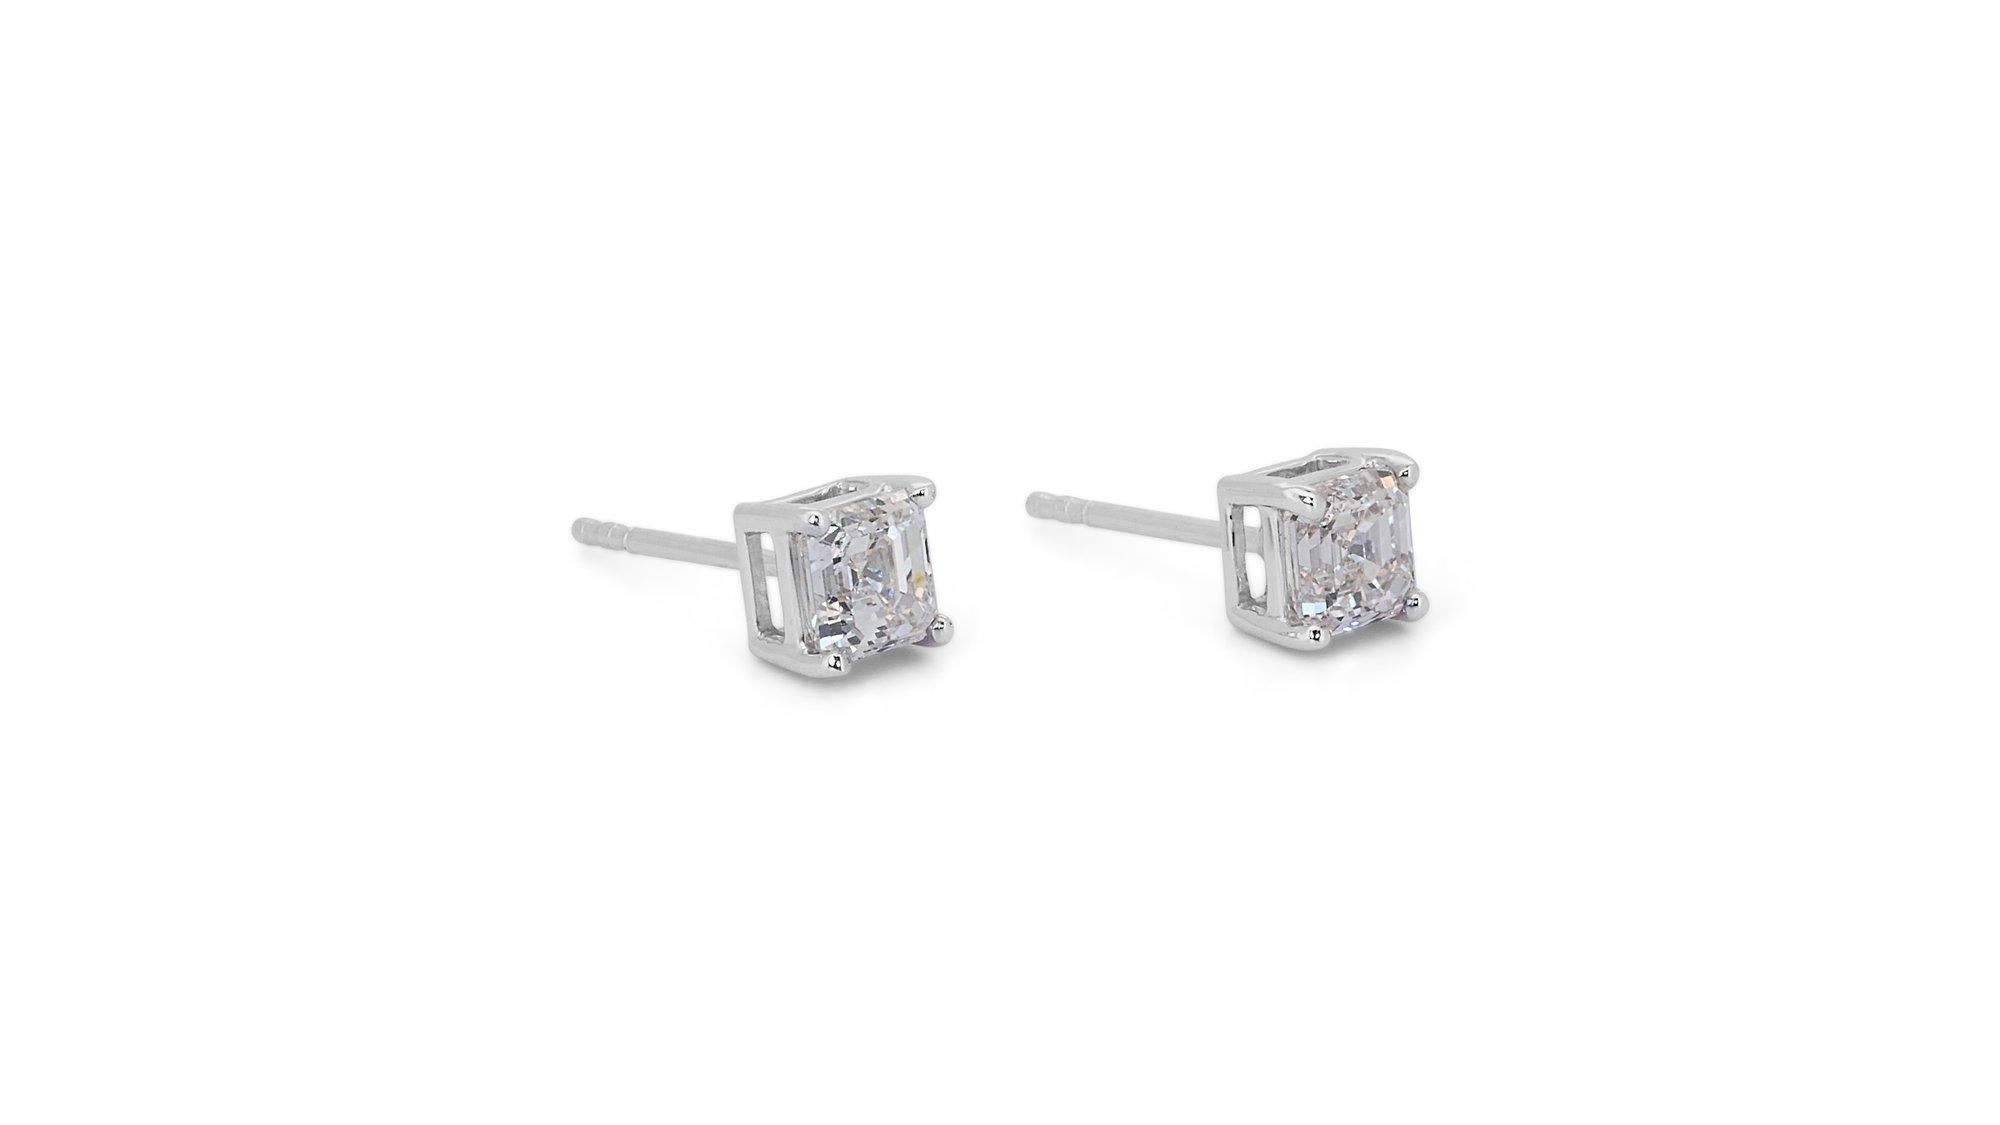 Beautiful pair of stud earrings with a dazzling 1.3 carat Asscher cut diamonds 2